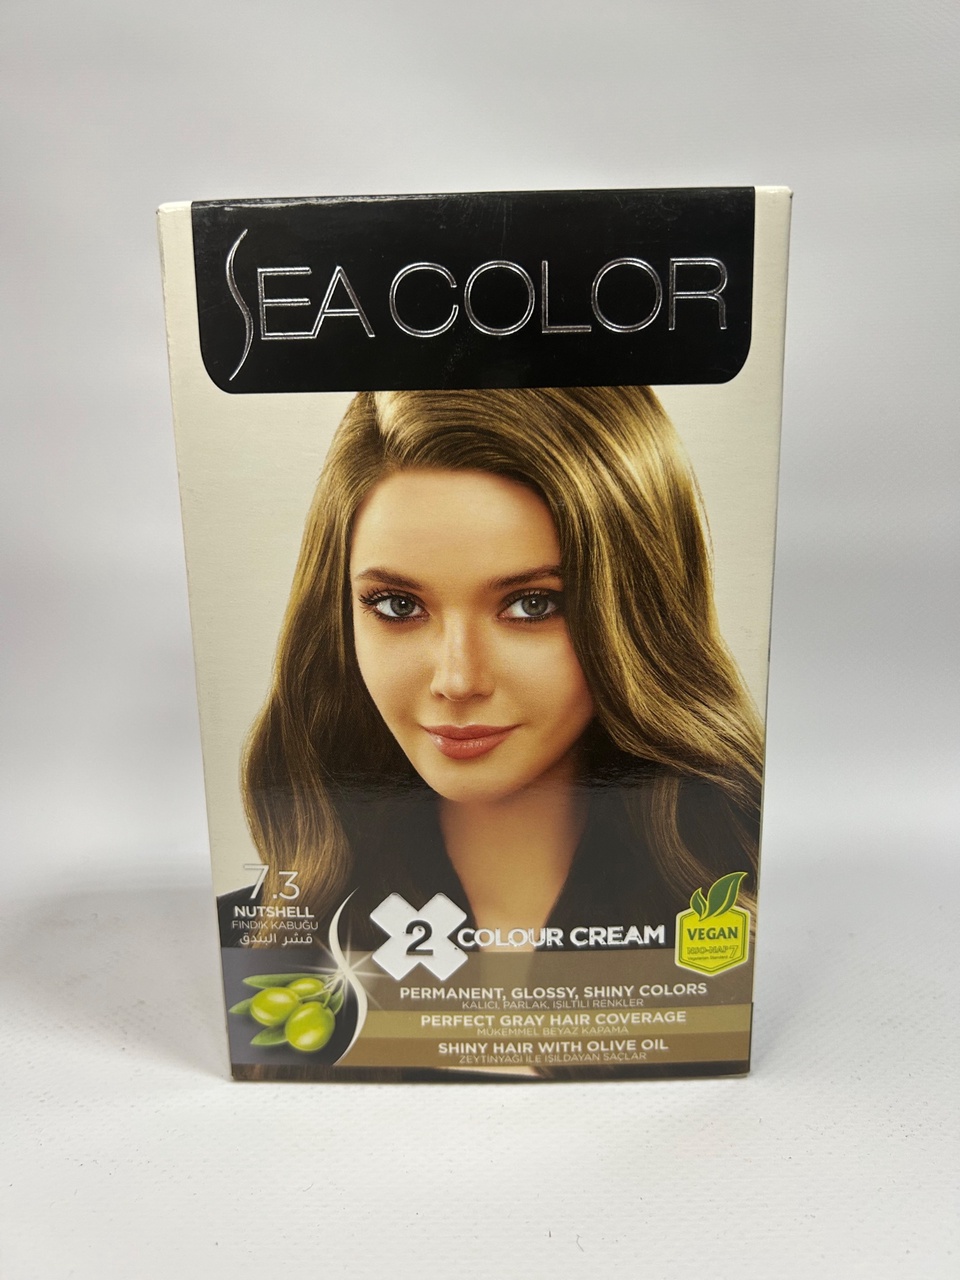 Sea Color 7.3 Краска д/волос «Фундук» - 300 ₽, заказать онлайн.